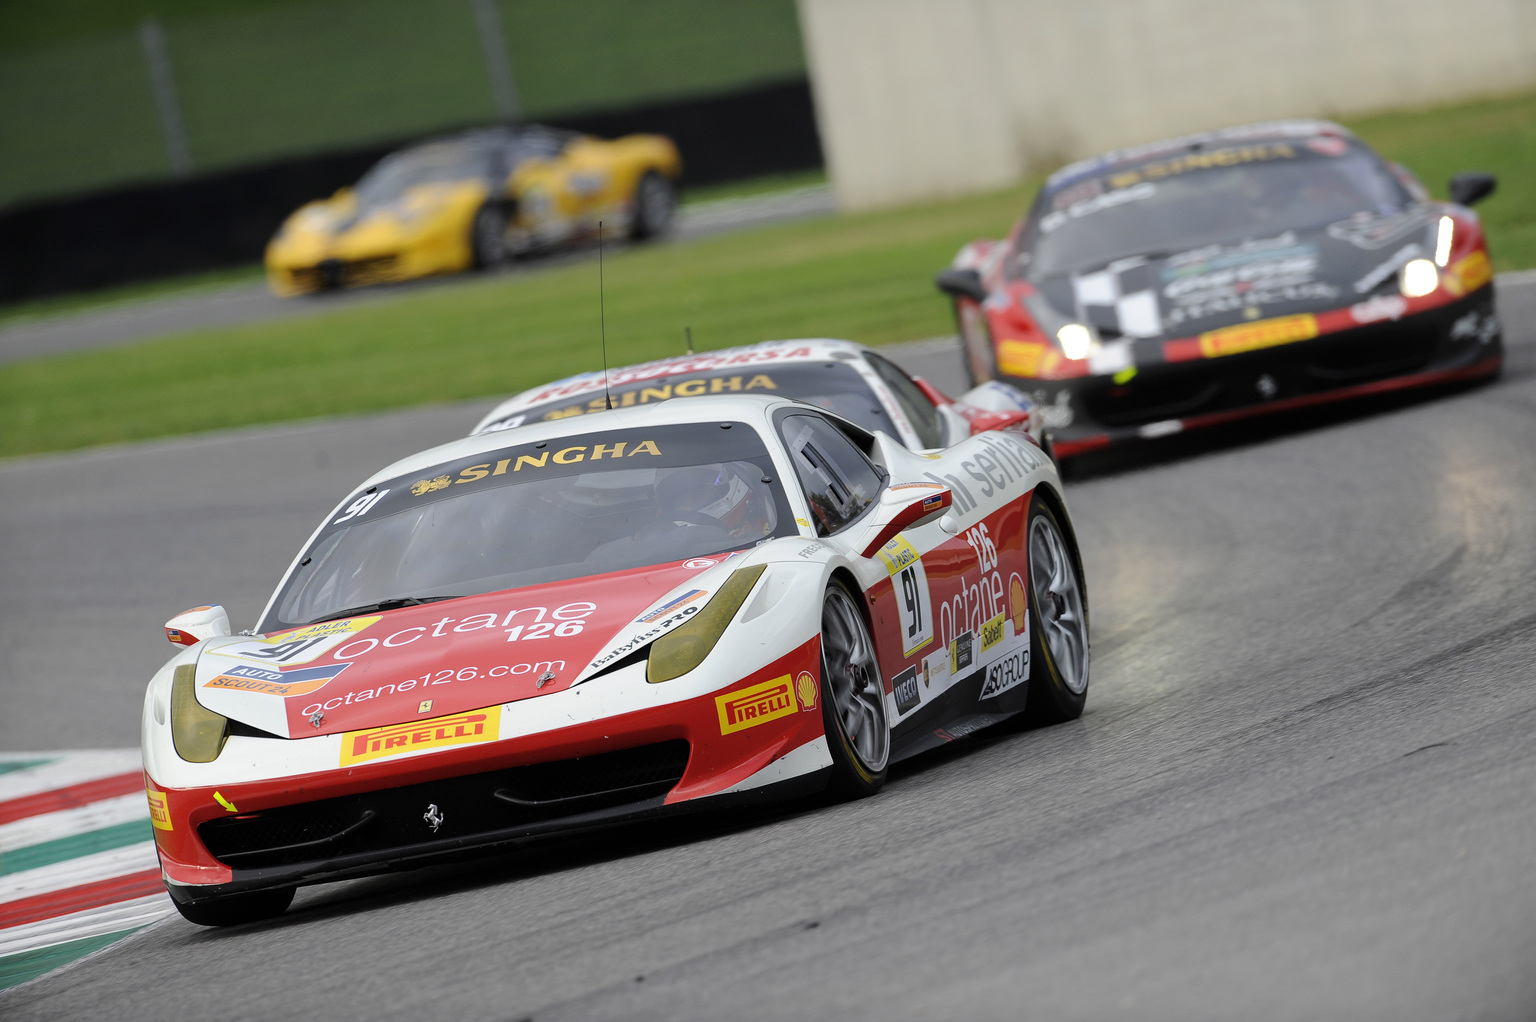 2013 Finali Mondiali Ferrari-2